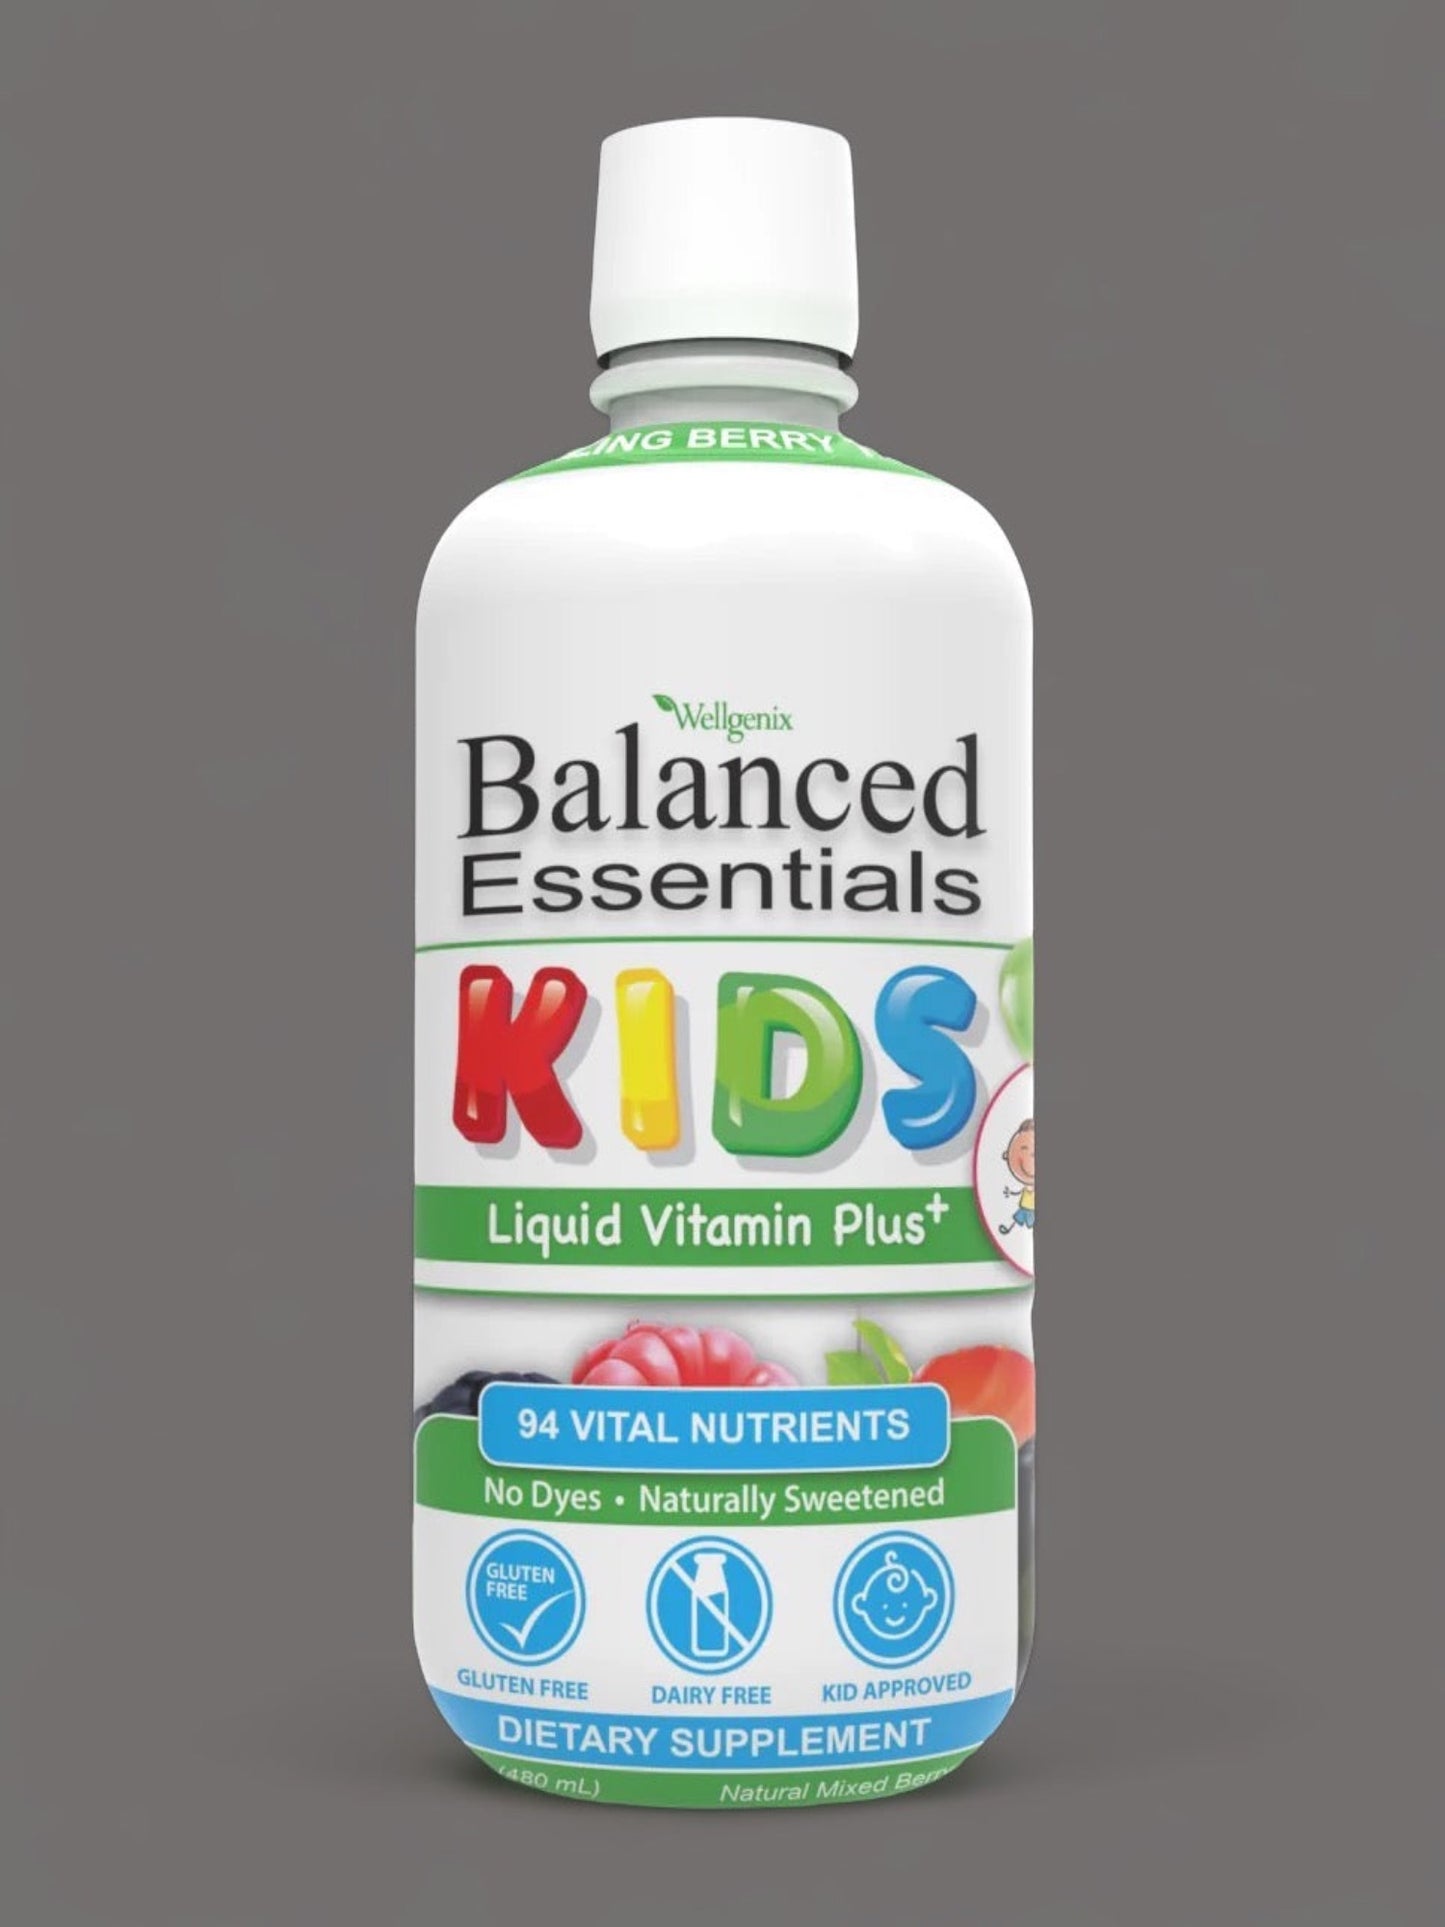 Balanced Essentials Kids: Kids Complete Liquid Multi-Vitamin